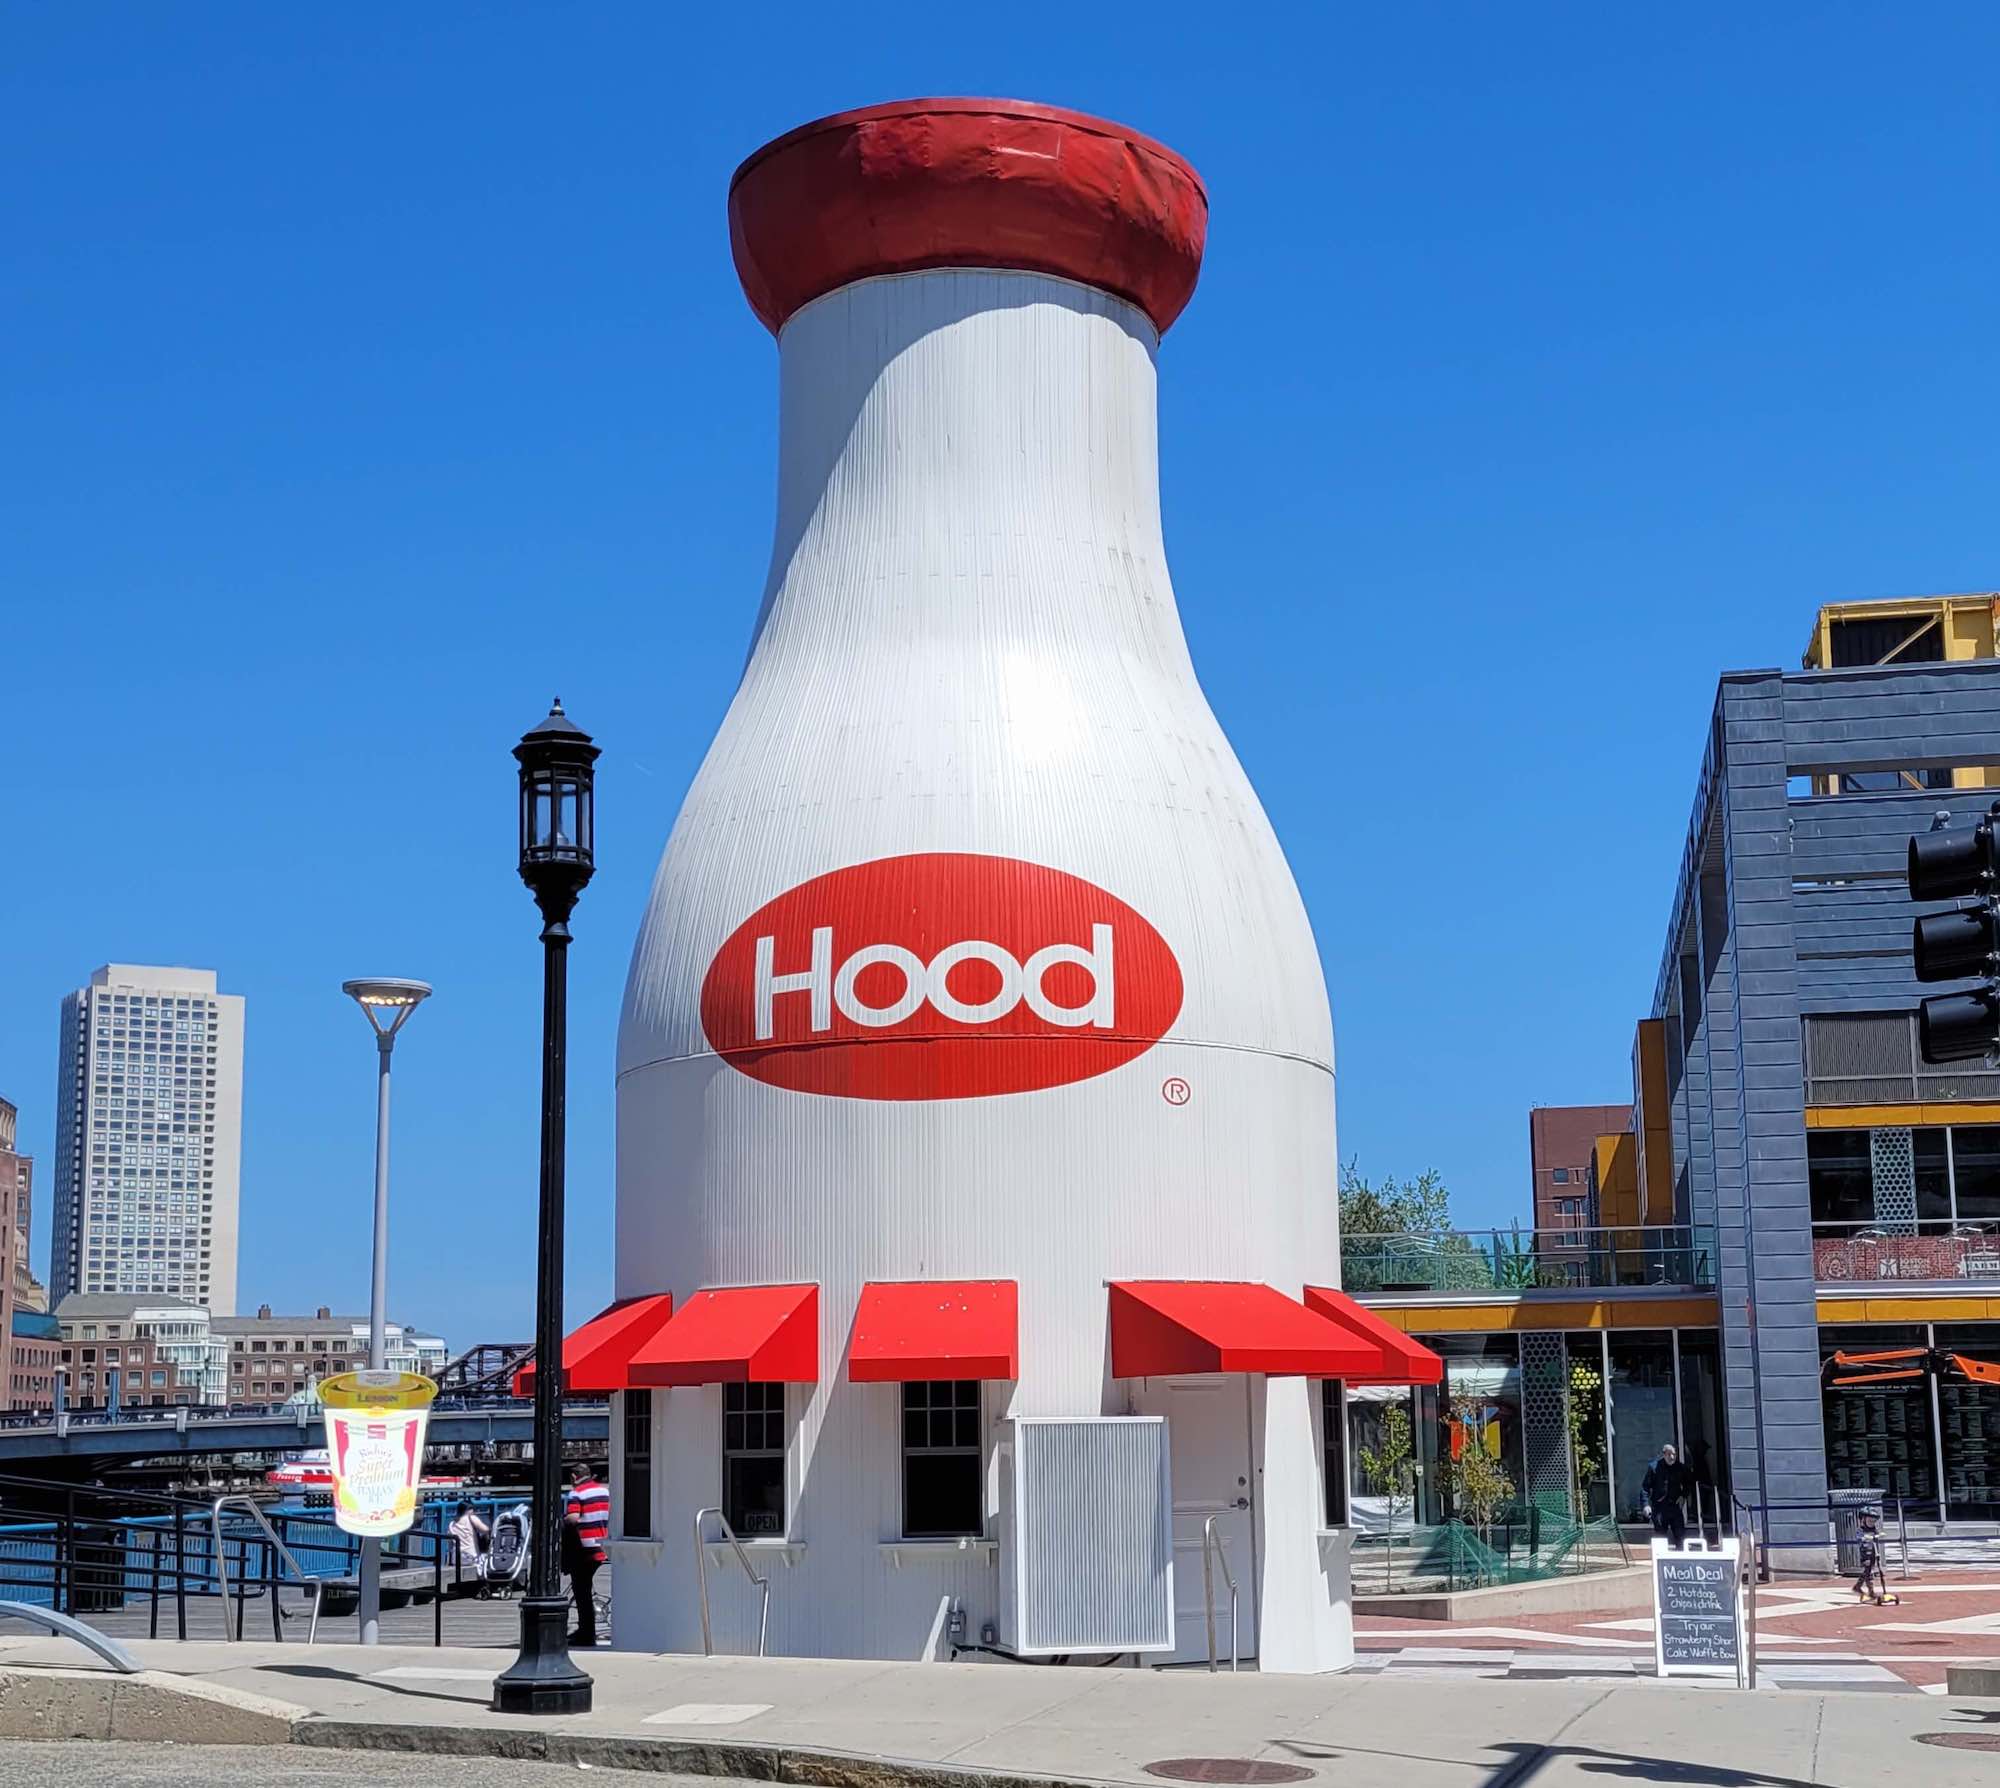 Hood Milk Bottle Boston